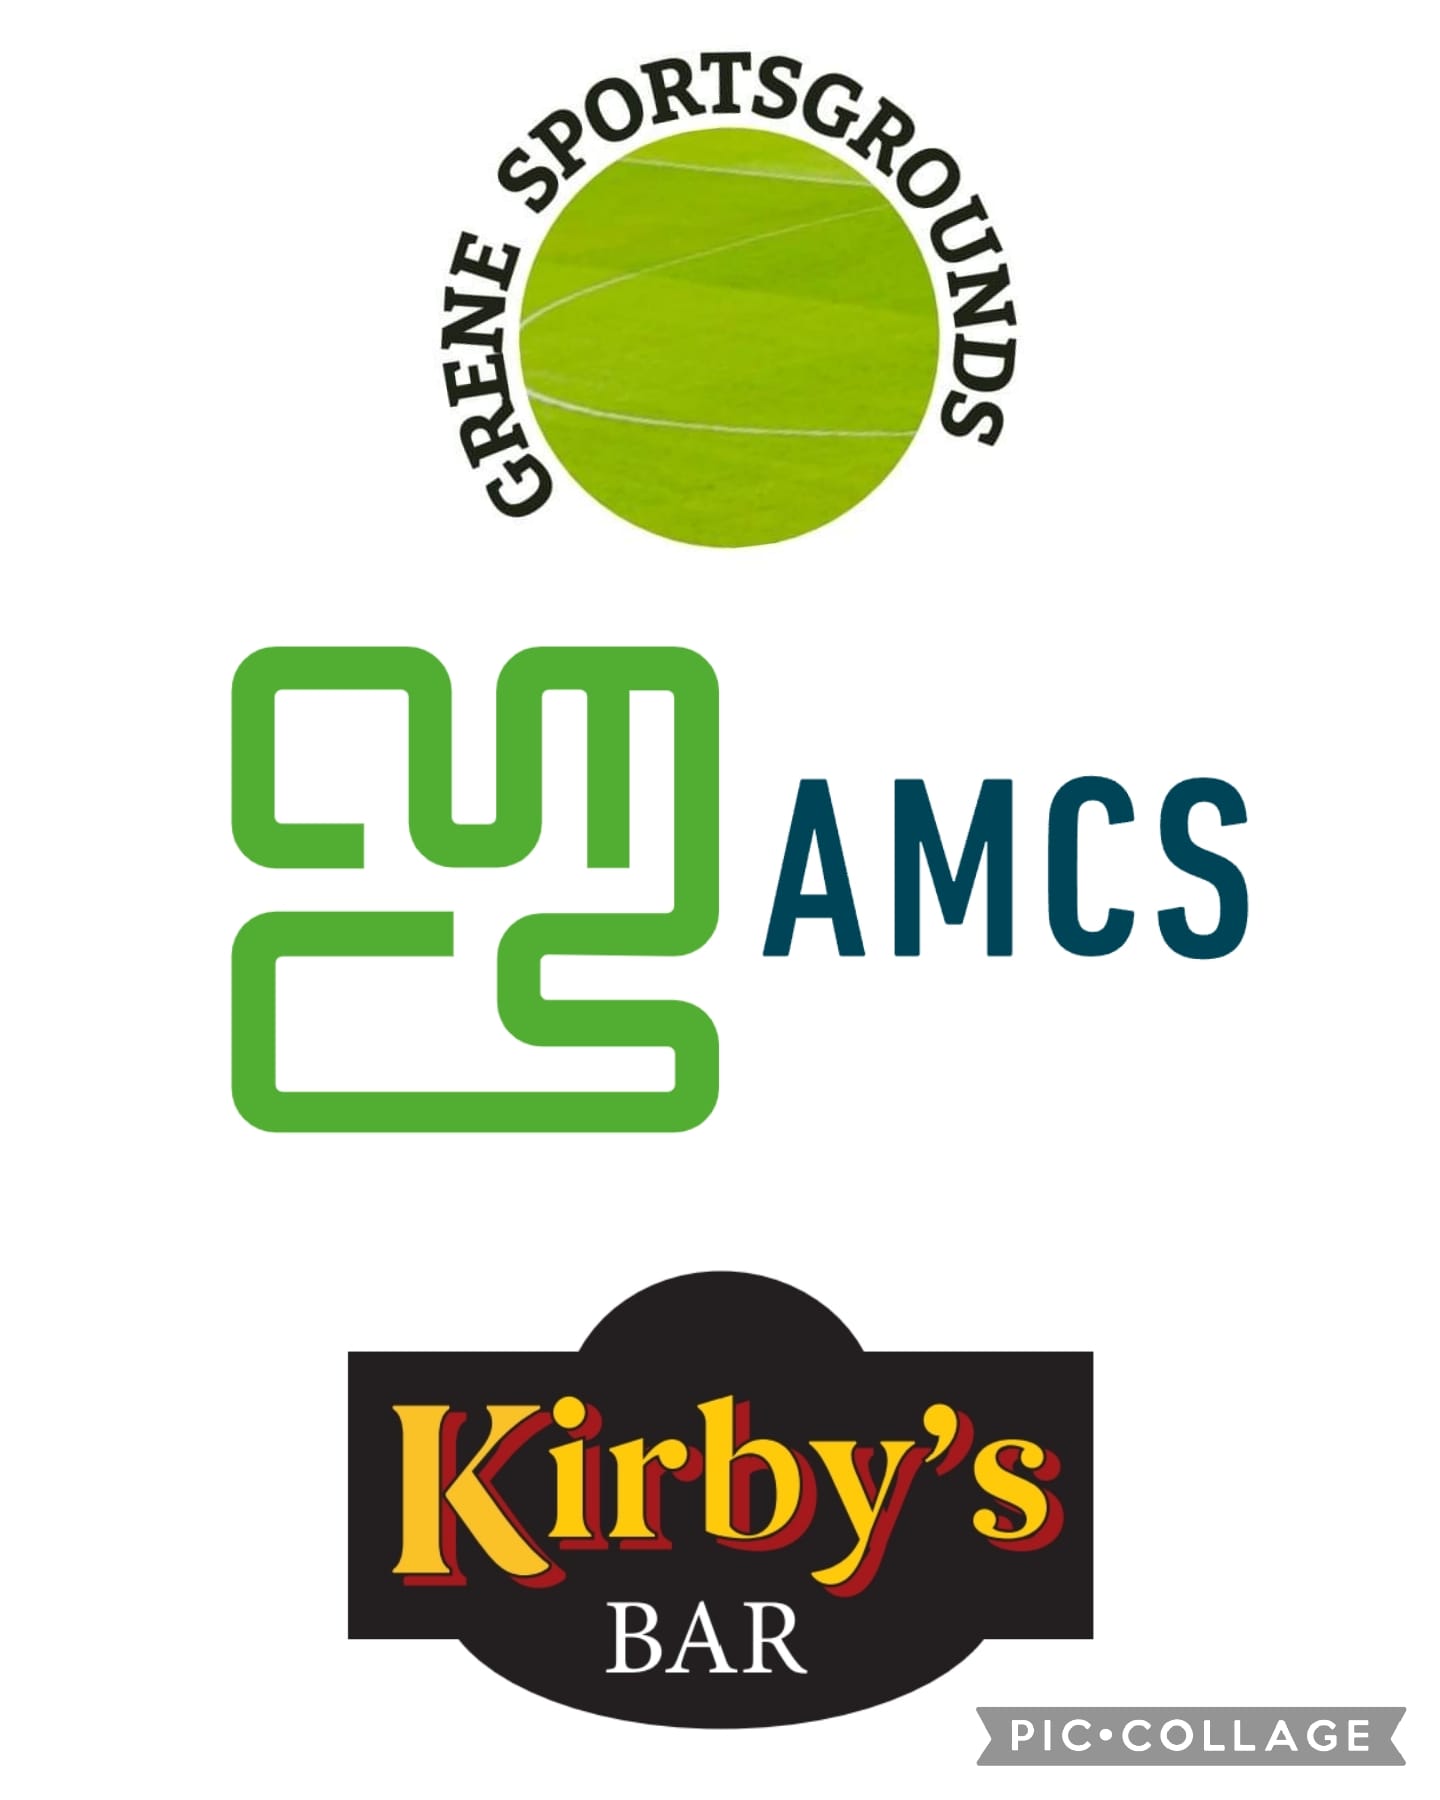 Grene Sports Ground, AMCS Group, Kirbys Bar